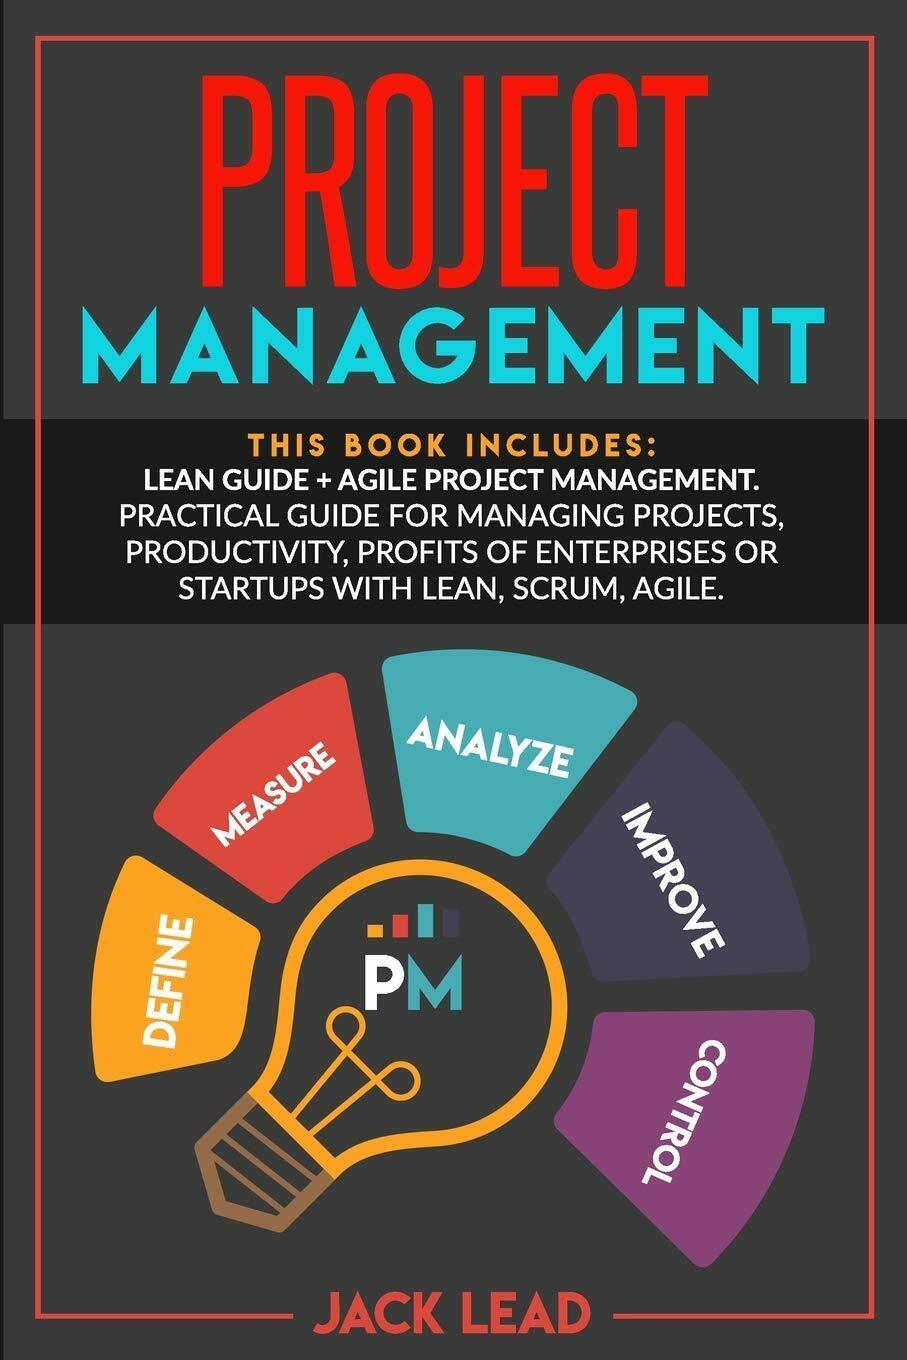 Project Management This Book Includes: Lean Guide + Agile Project Management. Pr